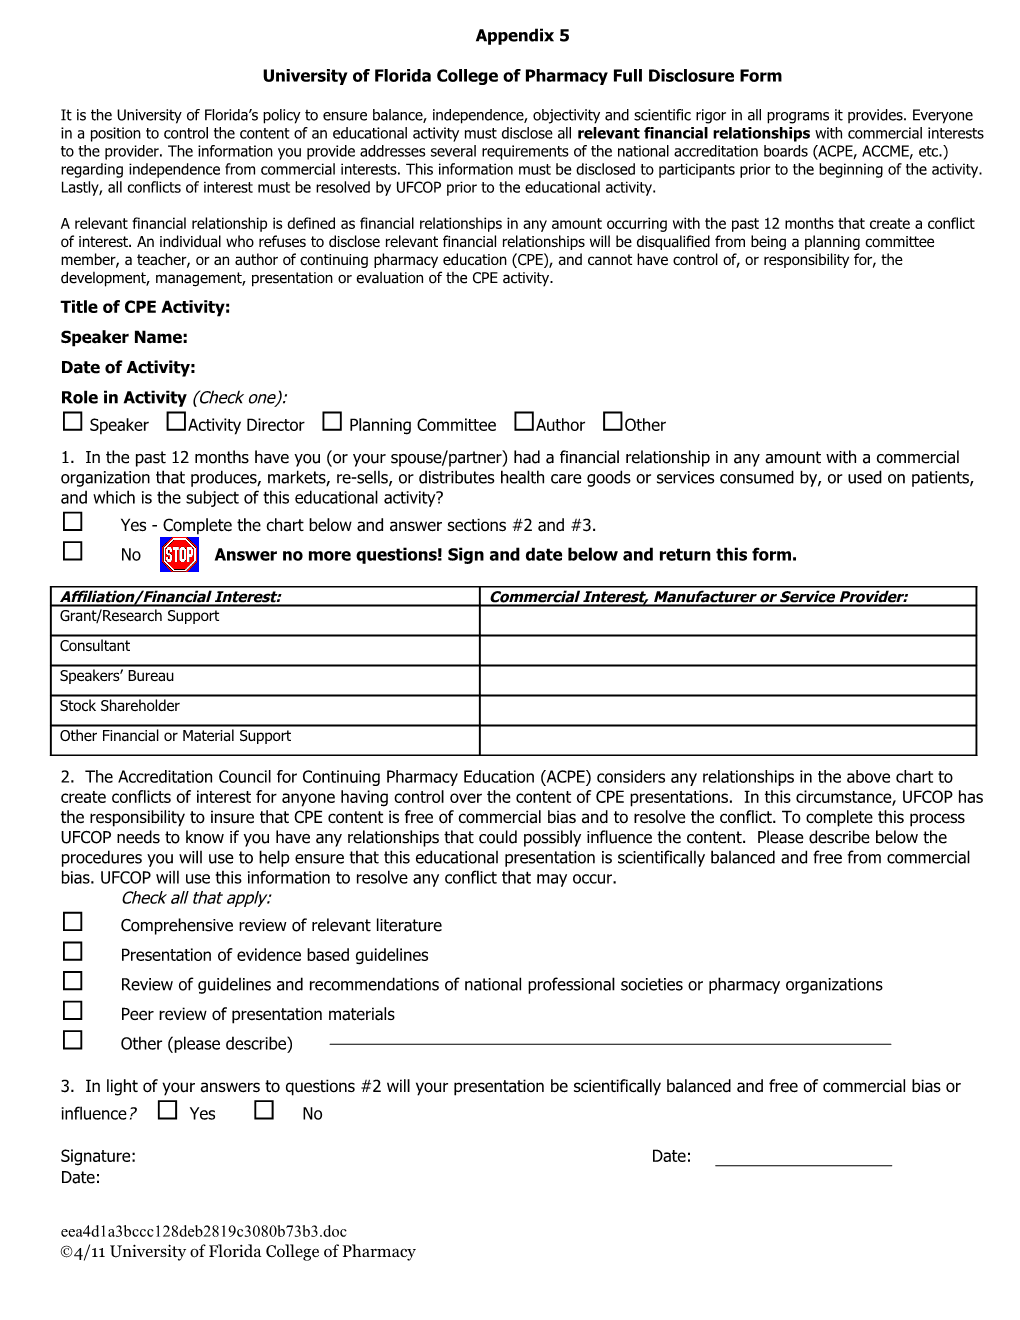 University of Florida College of Pharmacyfull Disclosure Form